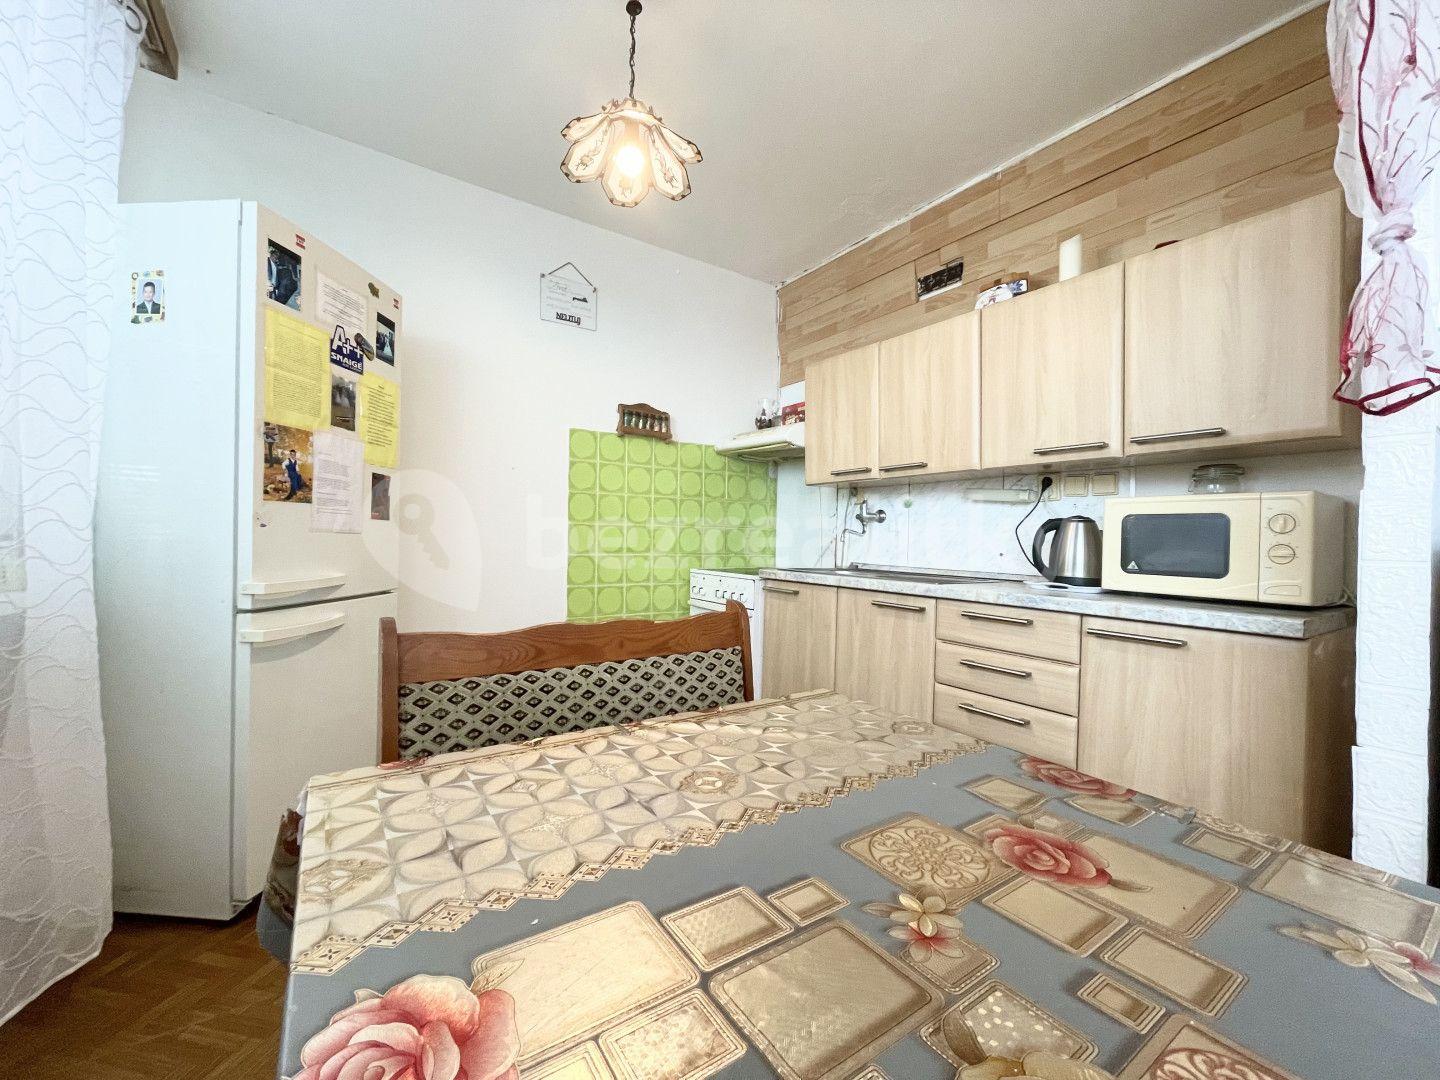 4 bedroom flat for sale, 85 m², Luční, Litvínov, Ústecký Region